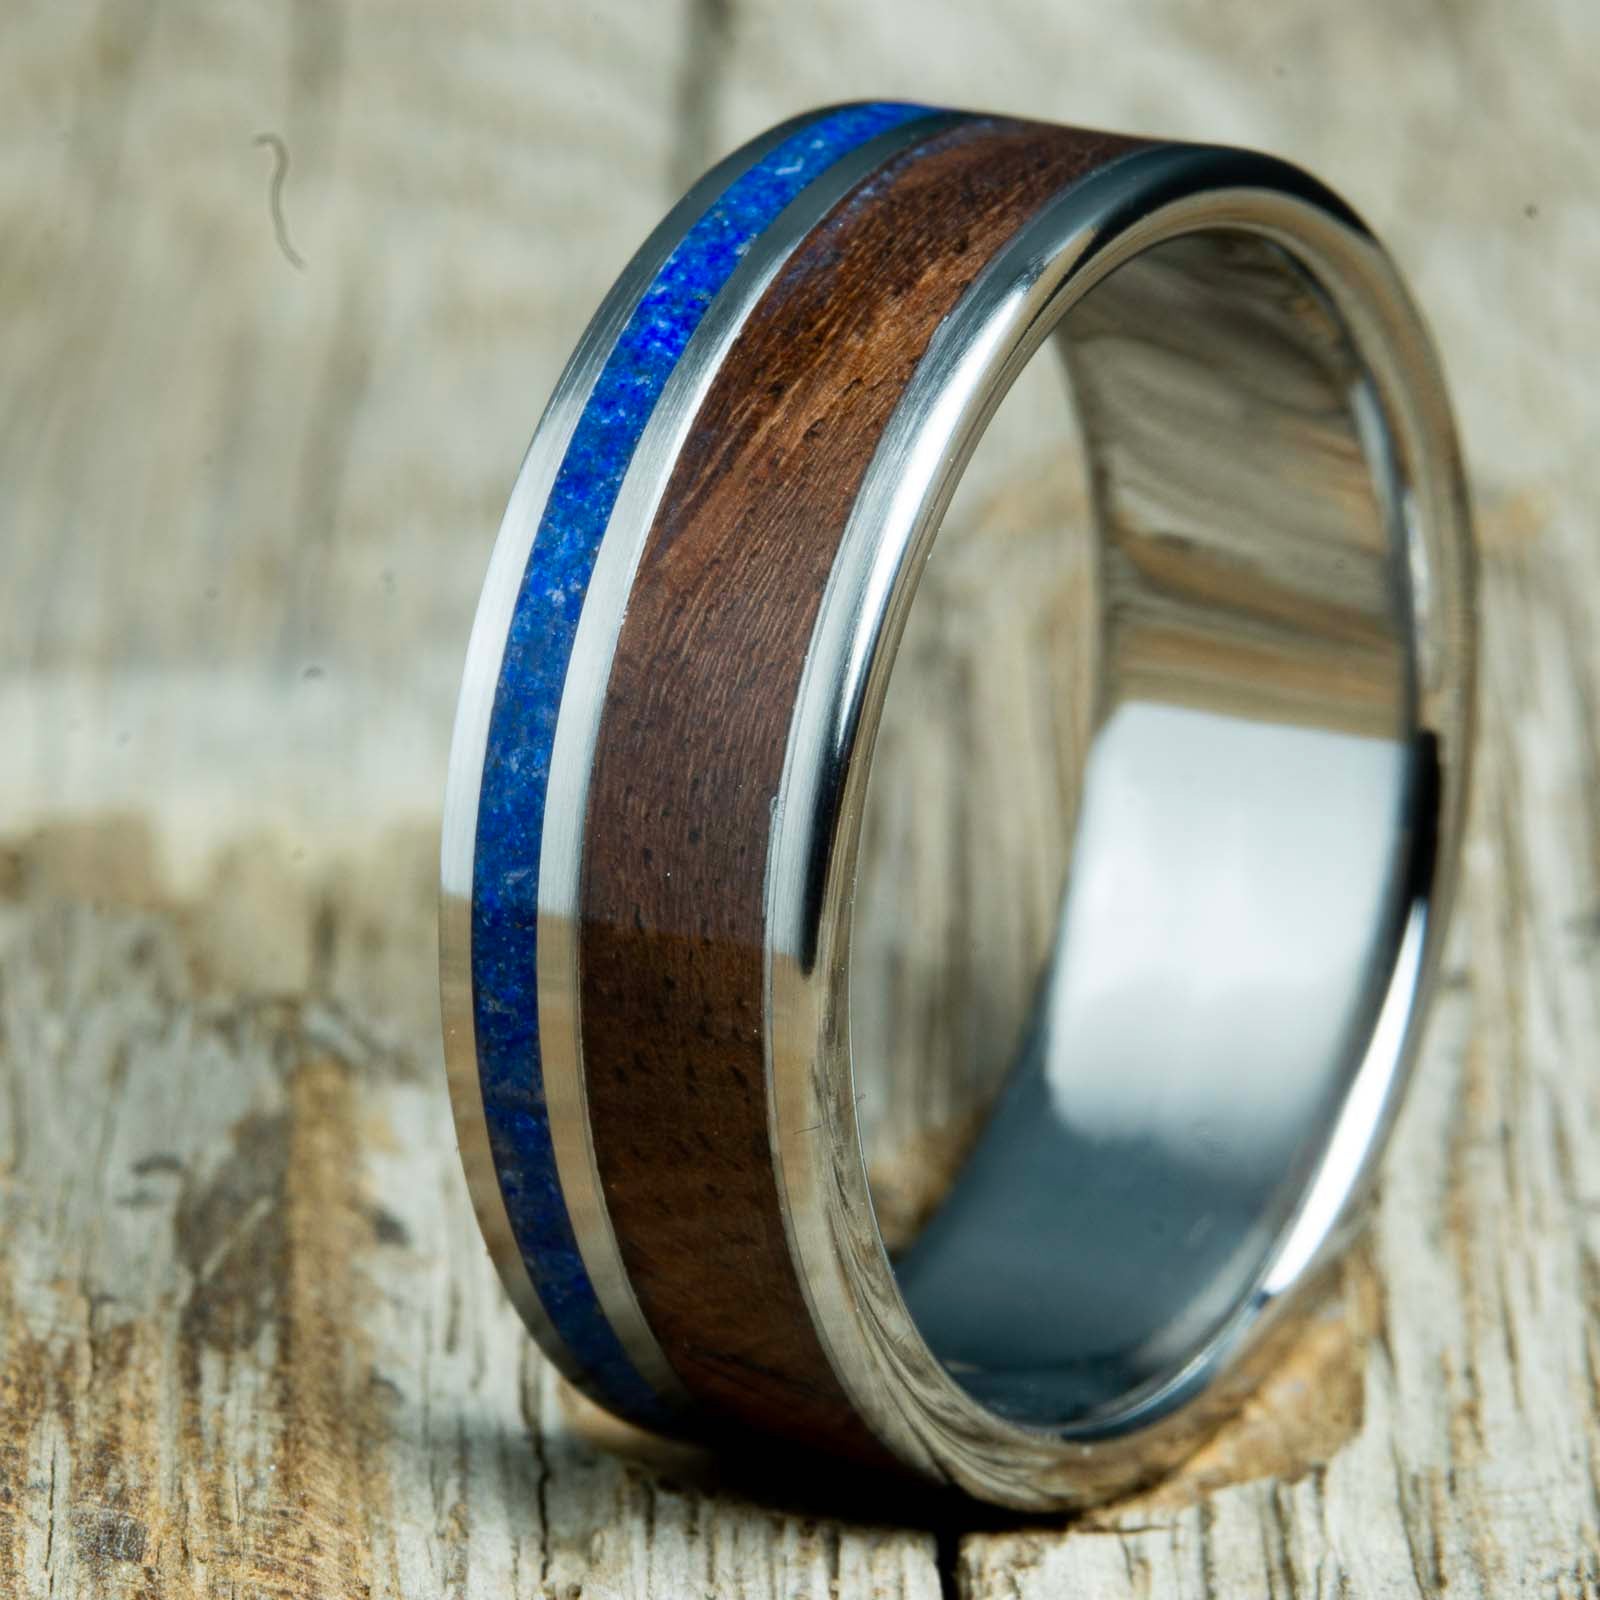 Walnut wood ring with single Lapis lazuli stone inlay